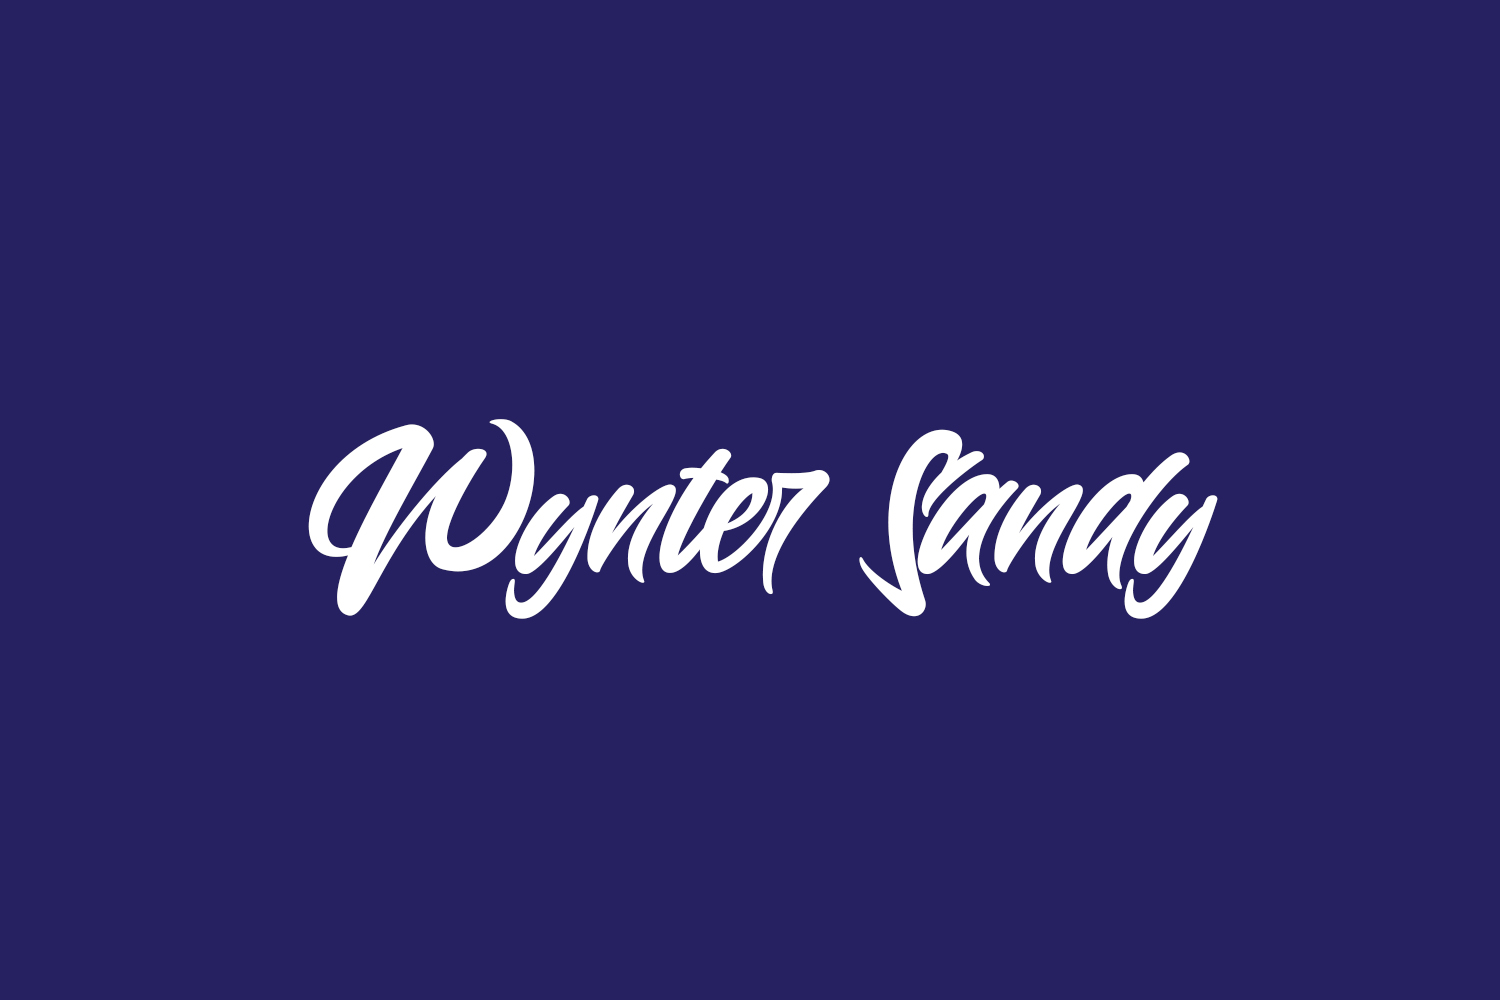 Wynter Sandy Free Font